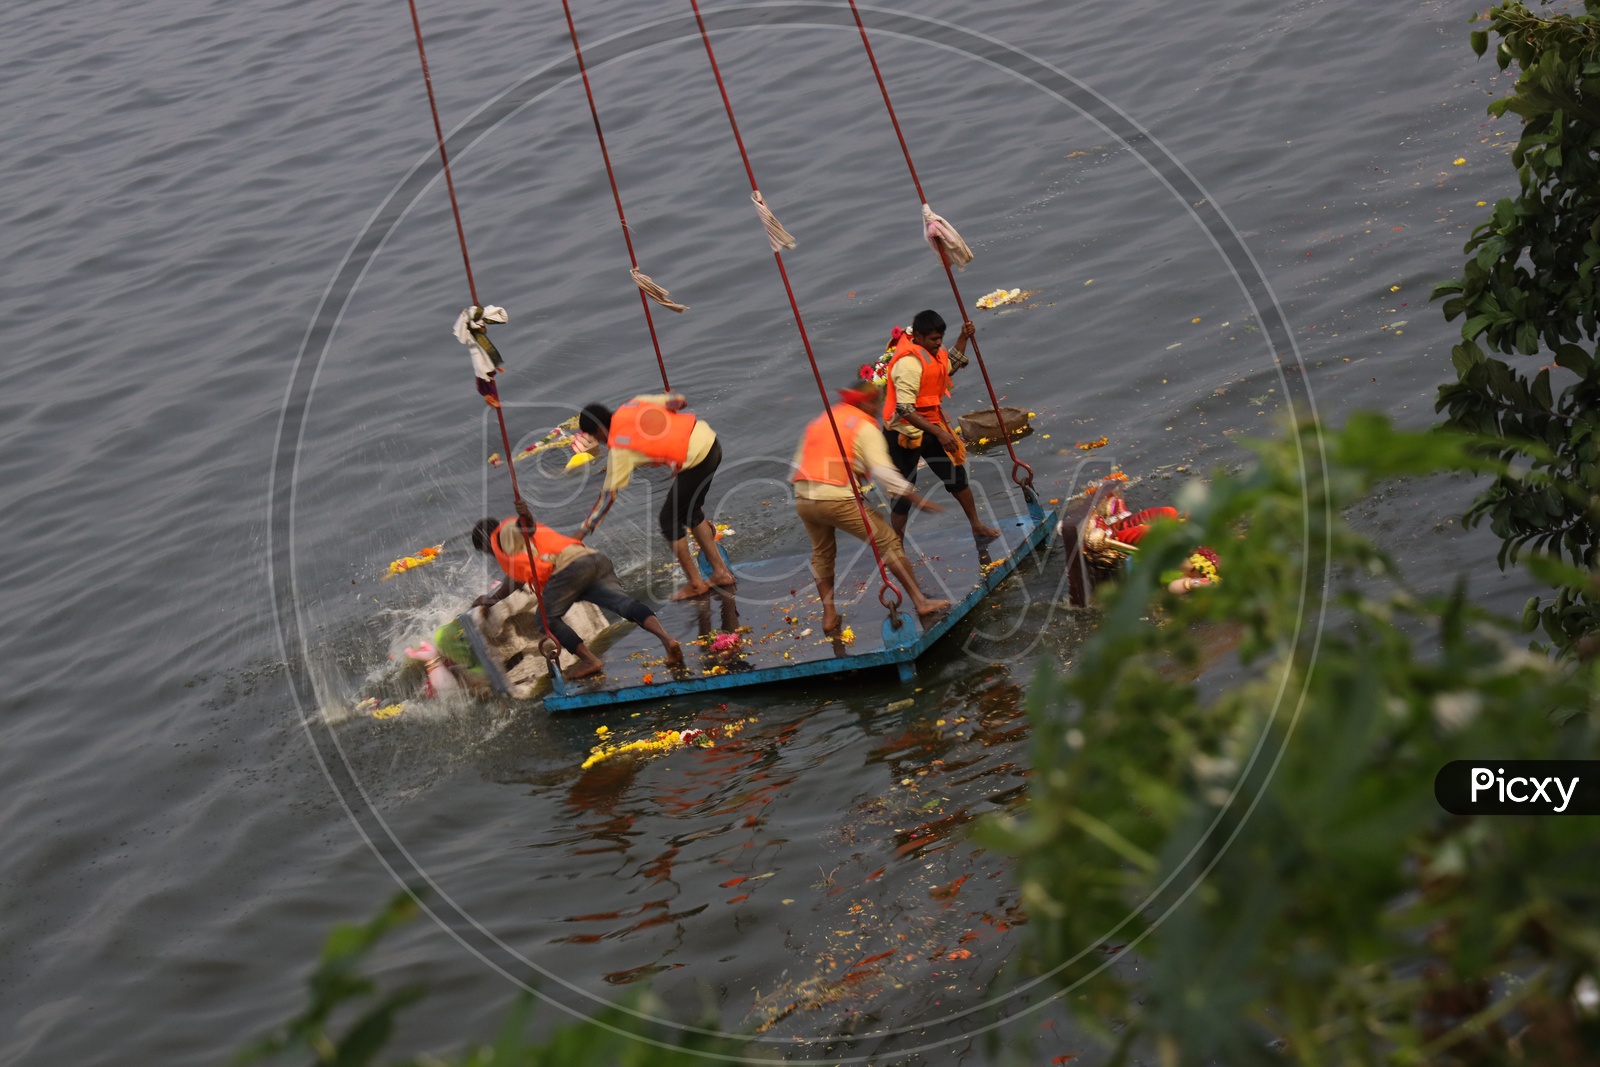 GHMC Arranged Workers Carrying Ganesh Idols In Cranes For Immersion in Hussain Sagar  Lake  During Ganesh Visarjan or Nimarjan Event At Tank Bund